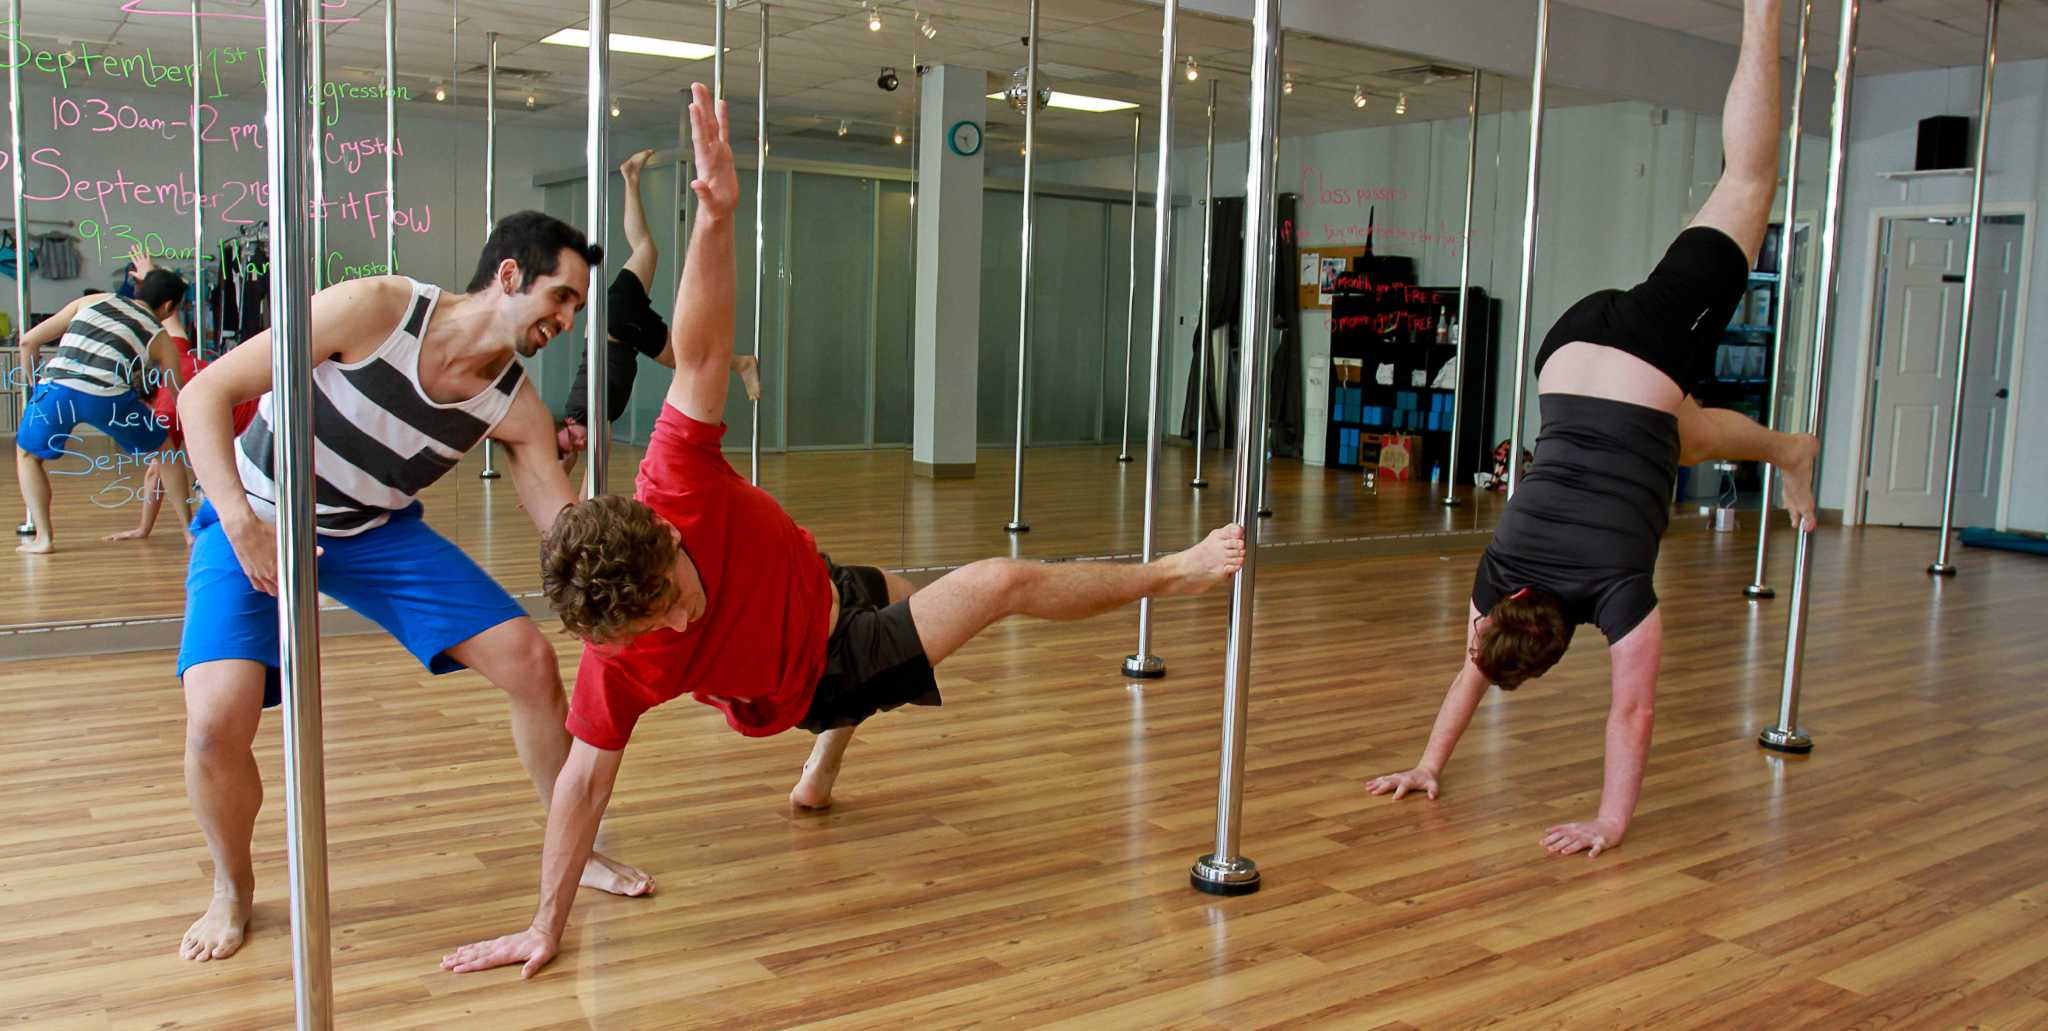 Men seeking workout challenge take pole-dancing class for a spin